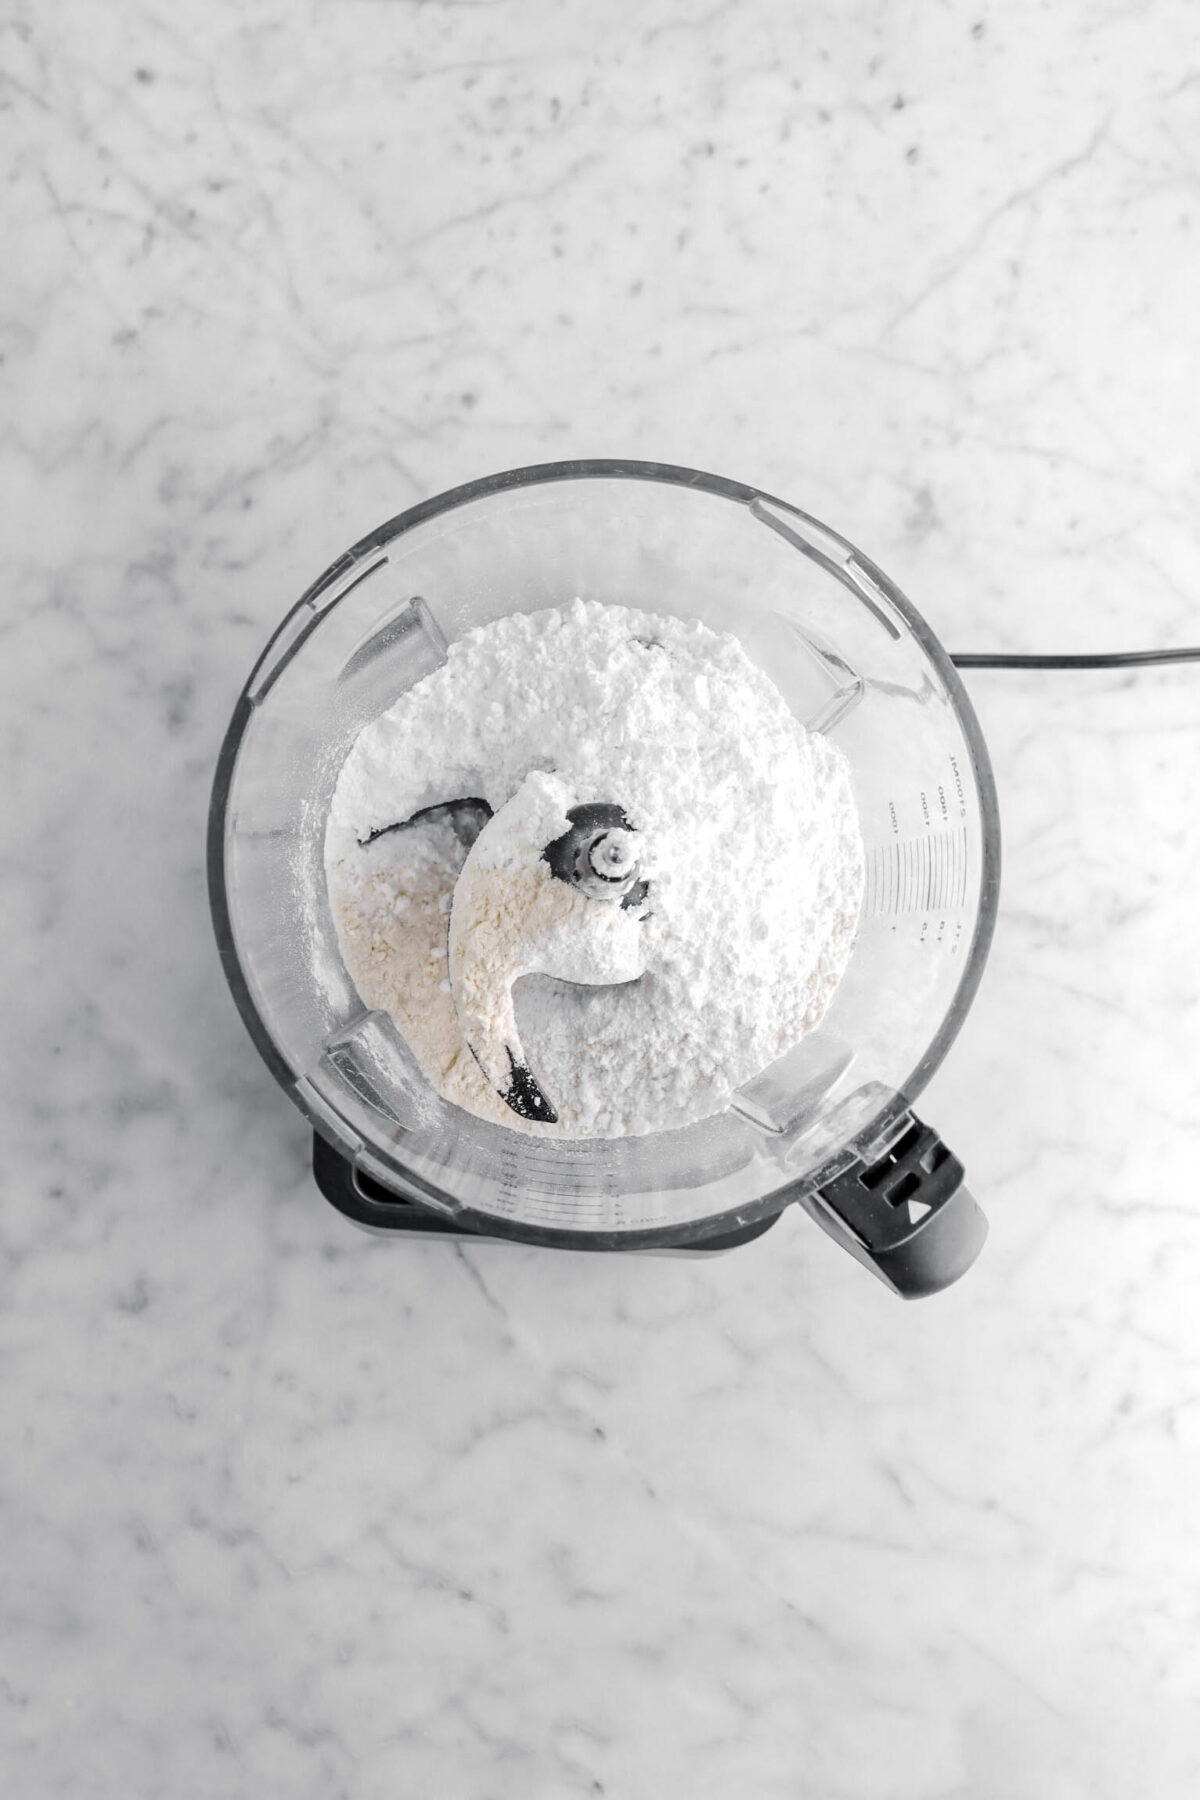 powdered sugar and flour in food processor.